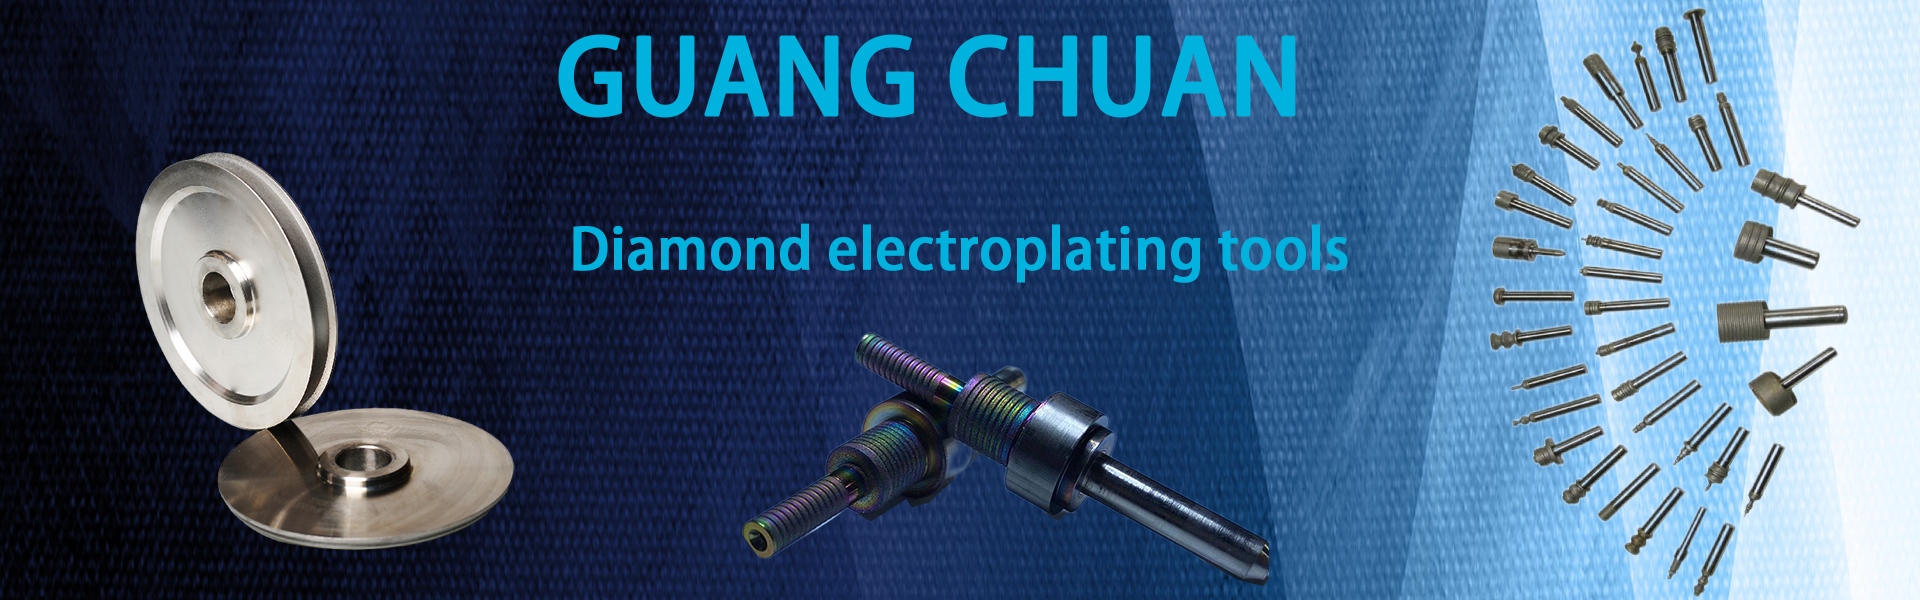 Diamantslipningshjul, diamantverktyg, borrbitar,Dongguan Guangchuan Abrasives Technology Co., Ltd